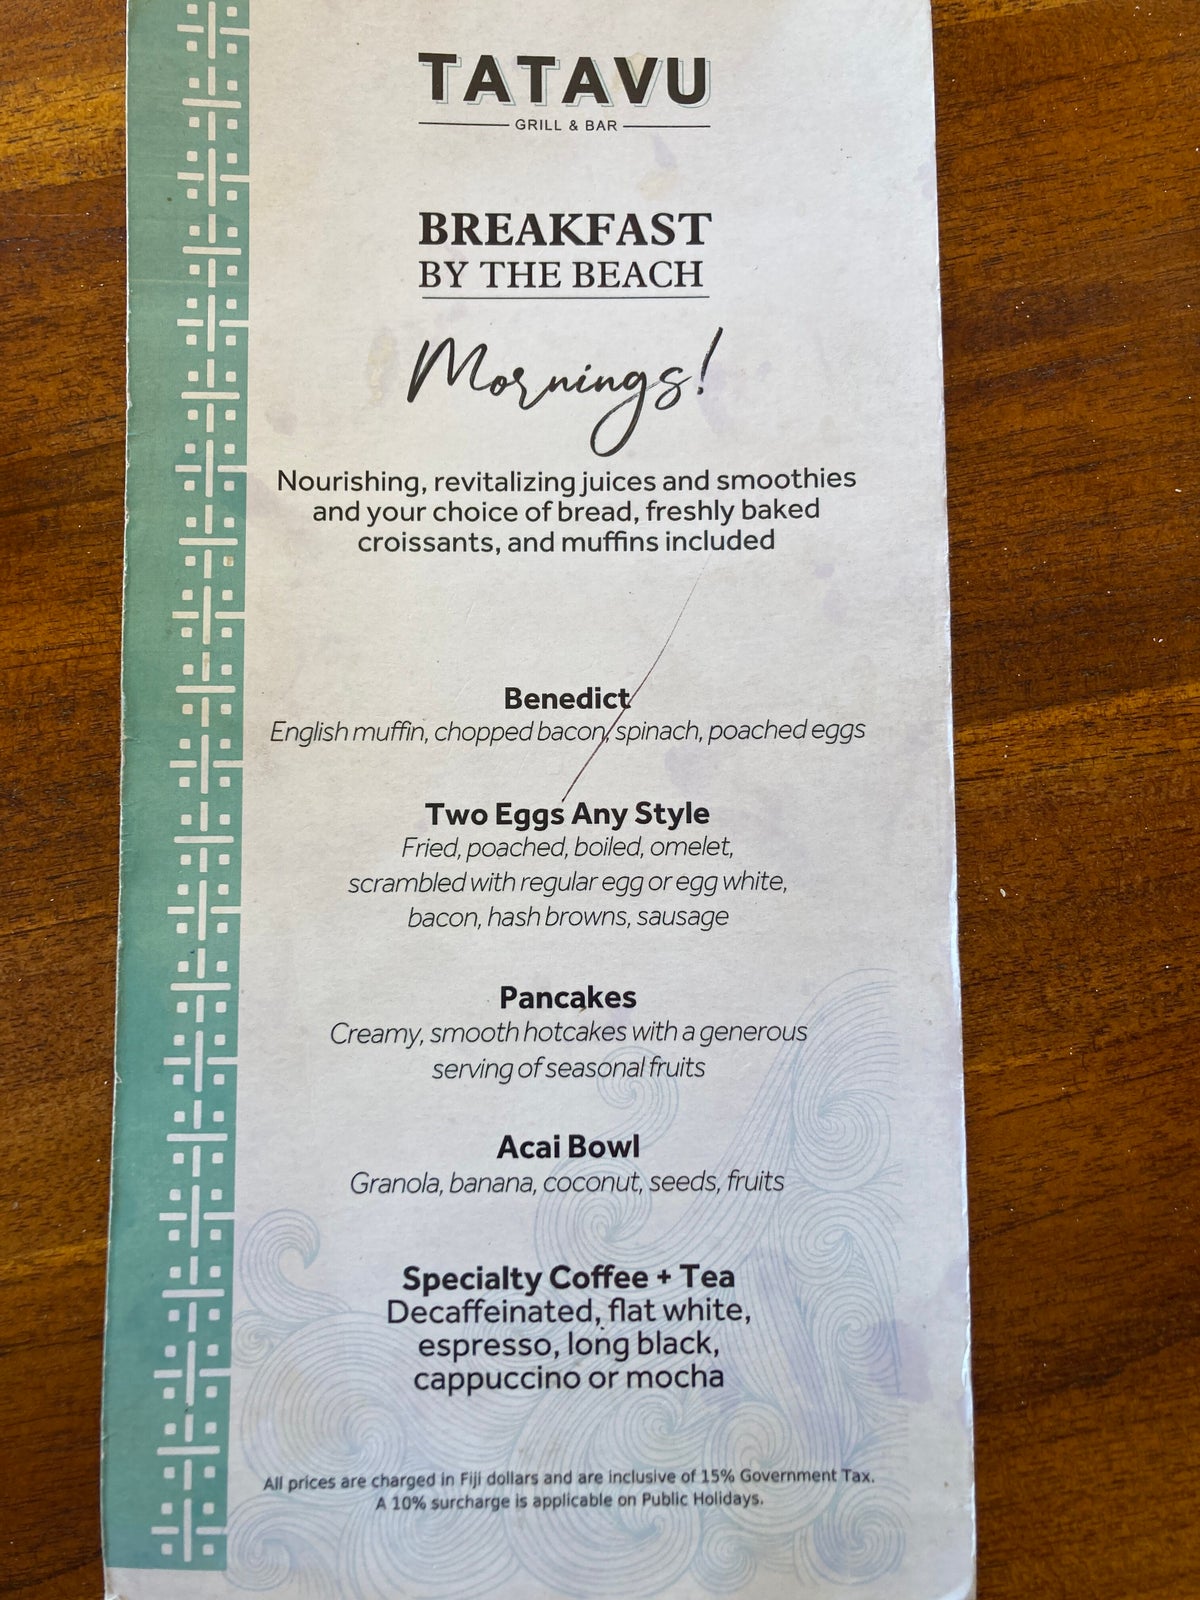 Sheraton Fiji Golf and Beach Resort Tatavu breakfast menu